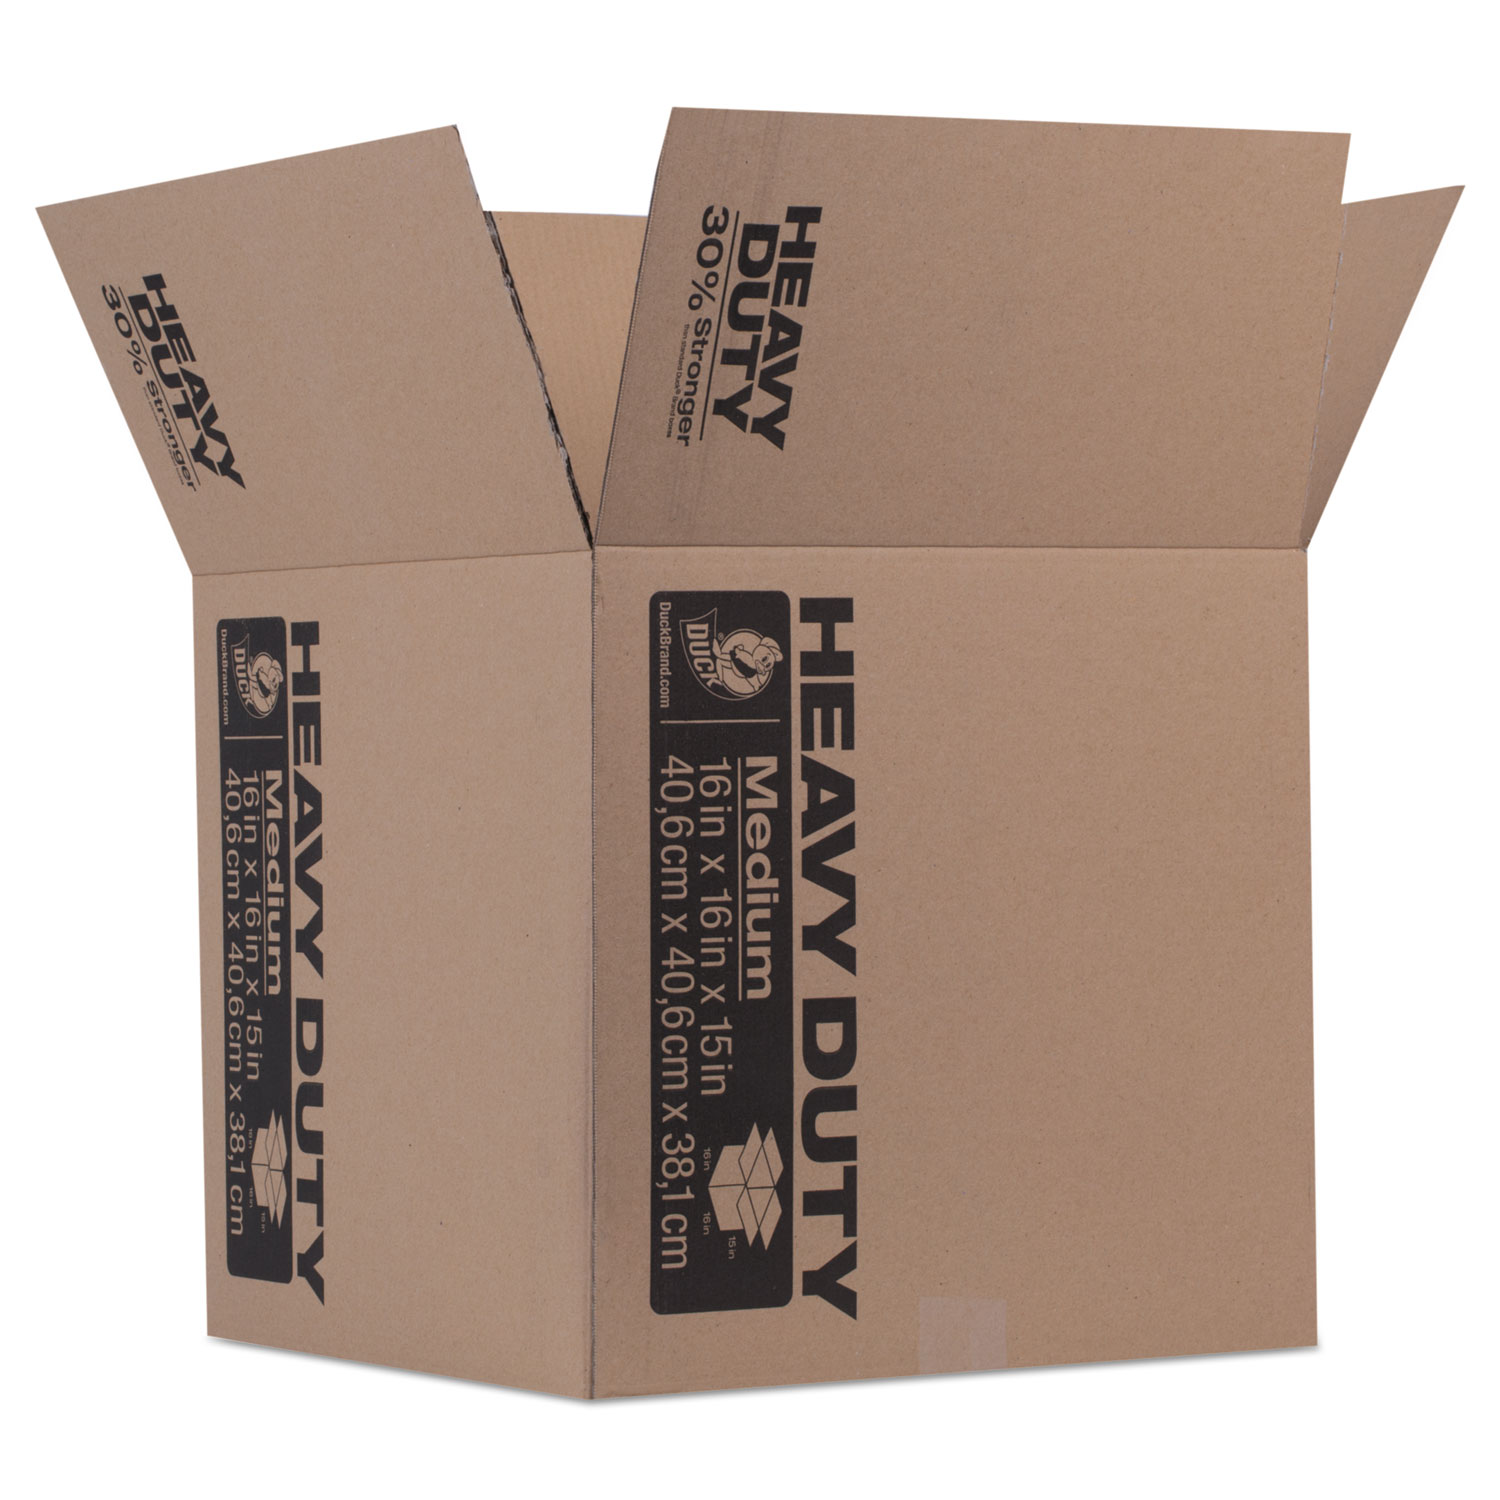 Heavy-Duty Moving/Storage Boxes, 16l x 16w x 15h, Brown